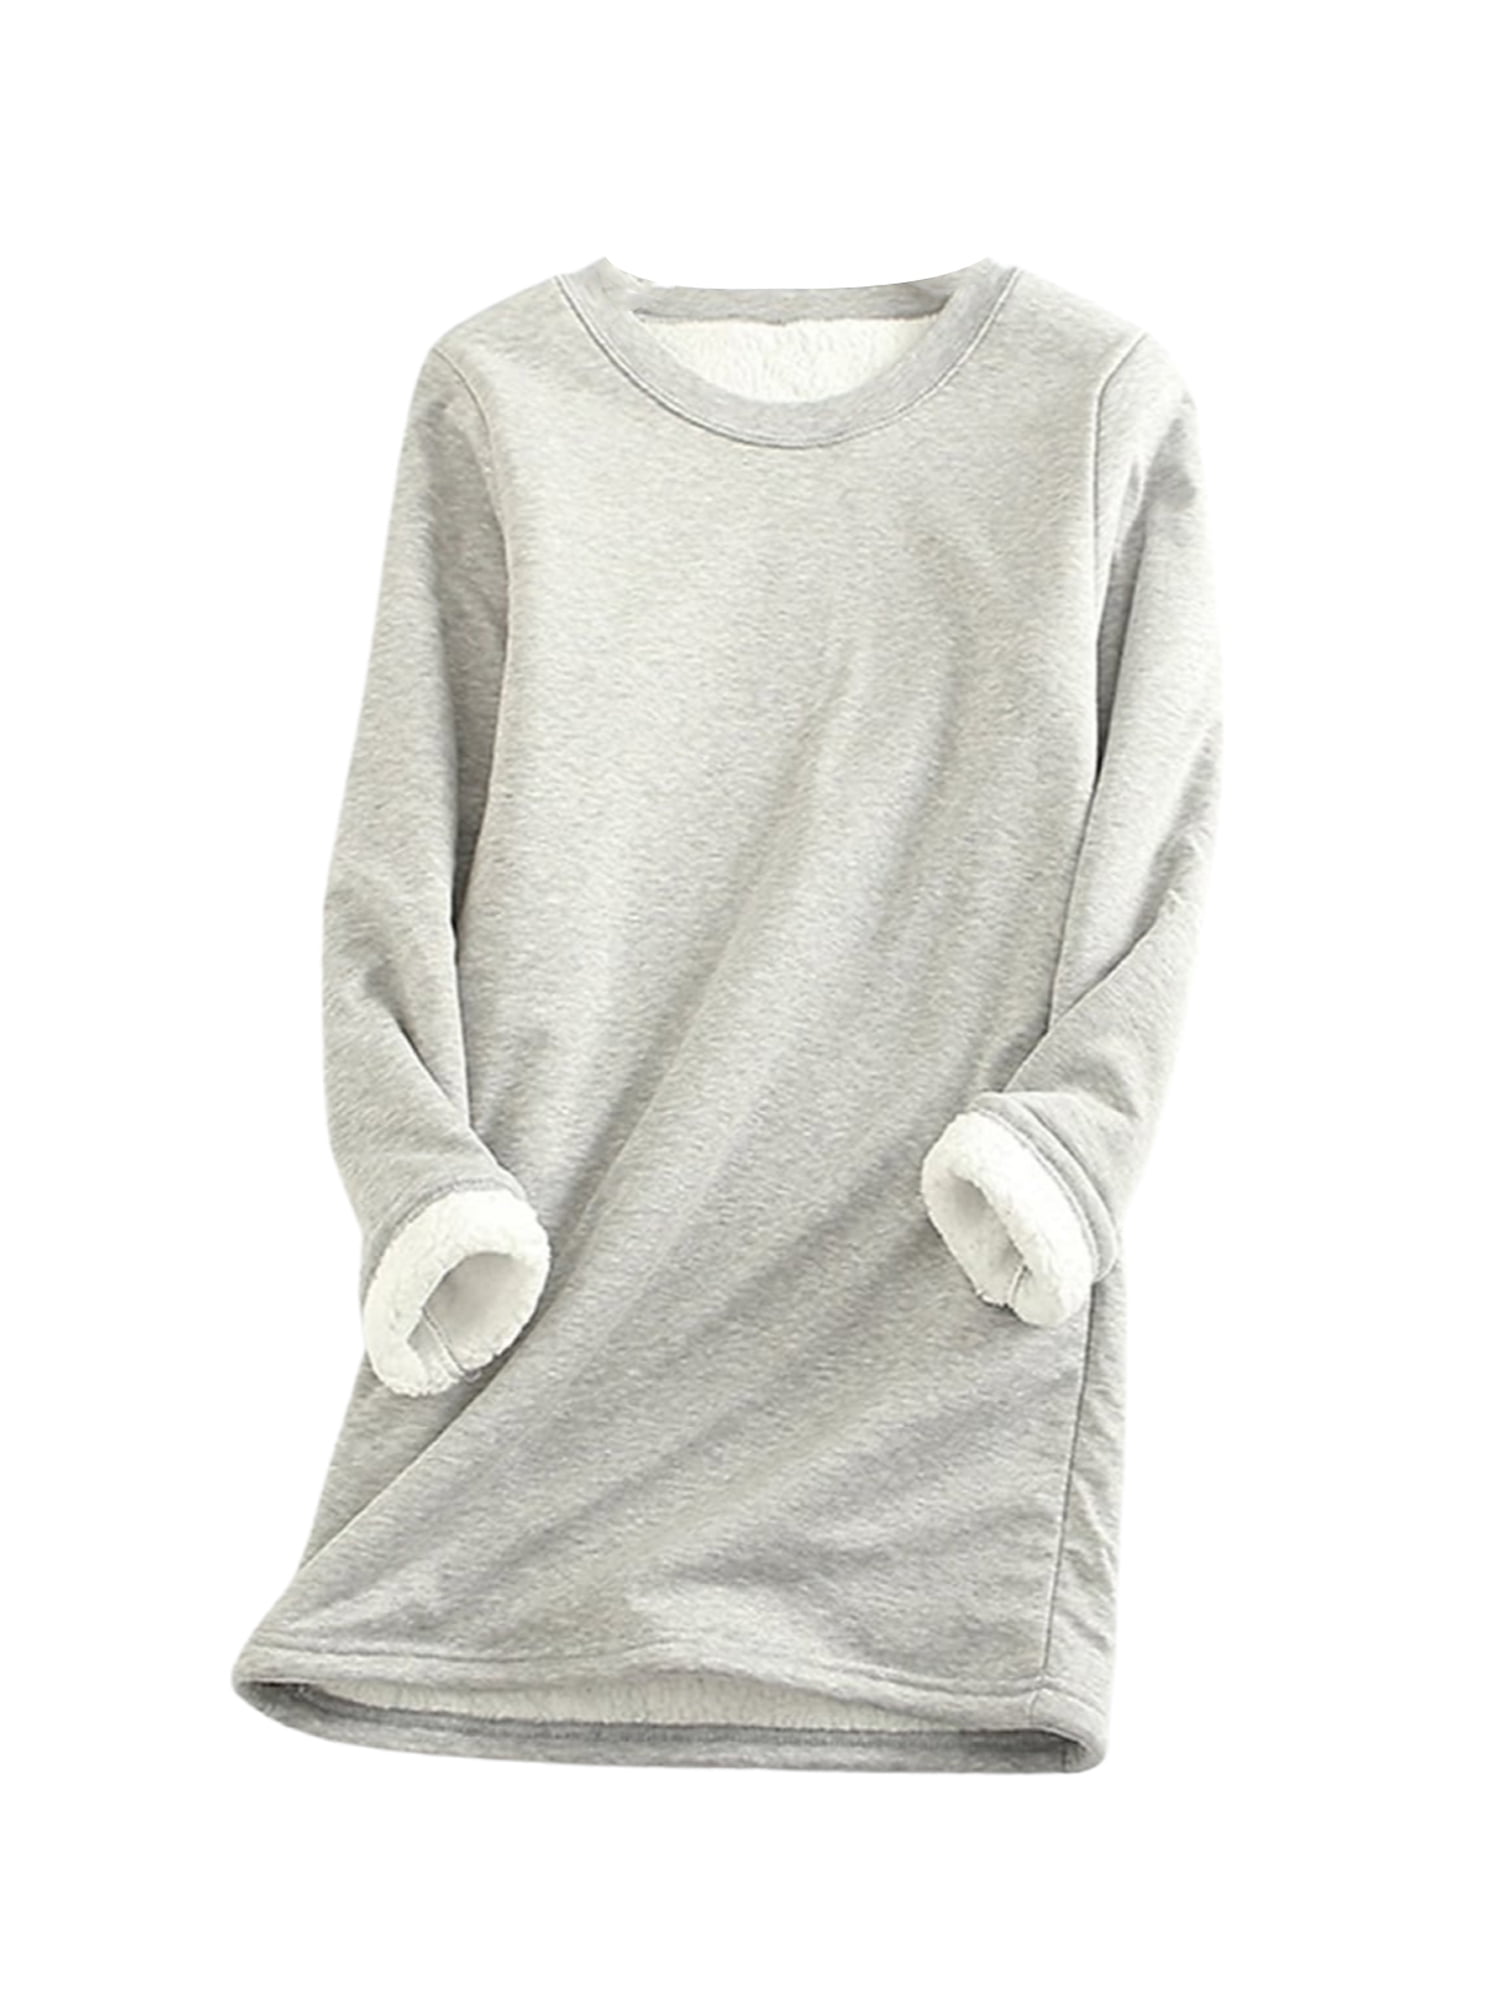 Basic Sweatshirt Dress for Women, Crewneck Long Sleeve Solid Color Tops ...